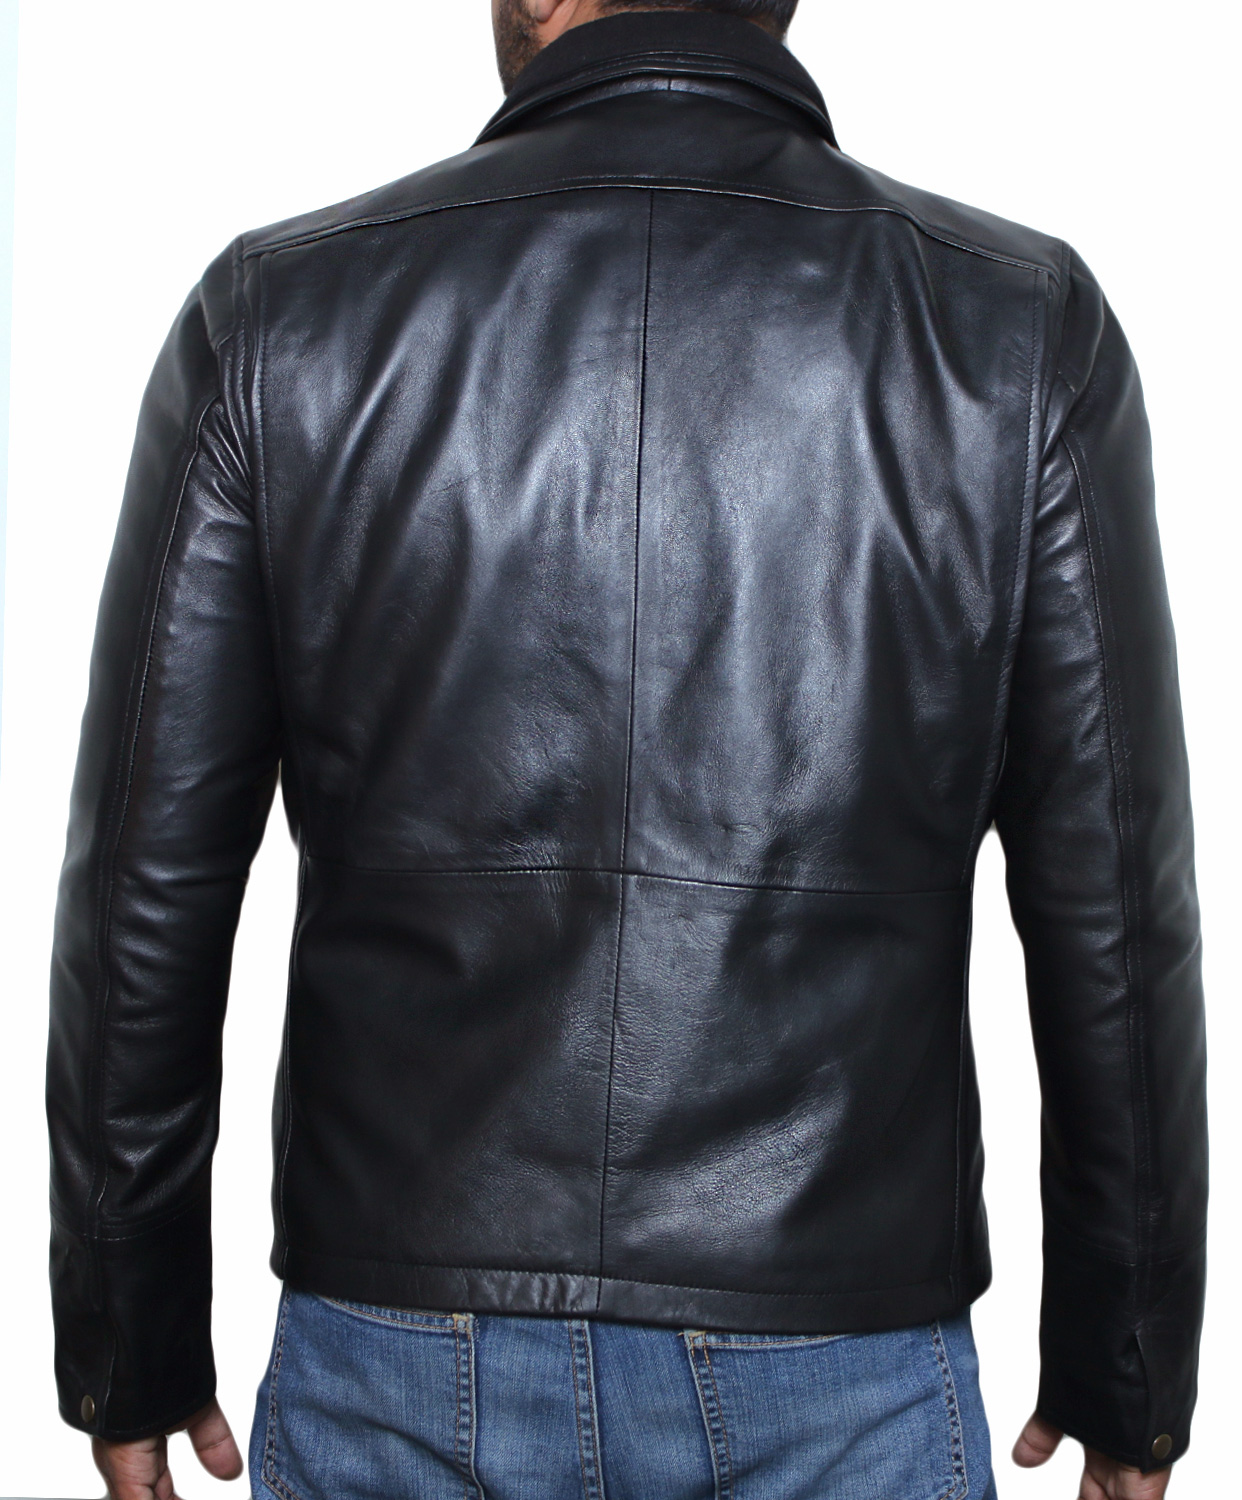 Laverapelle Mens Black Genuine Lambskin Leather Jacket - 1501641 | eBay